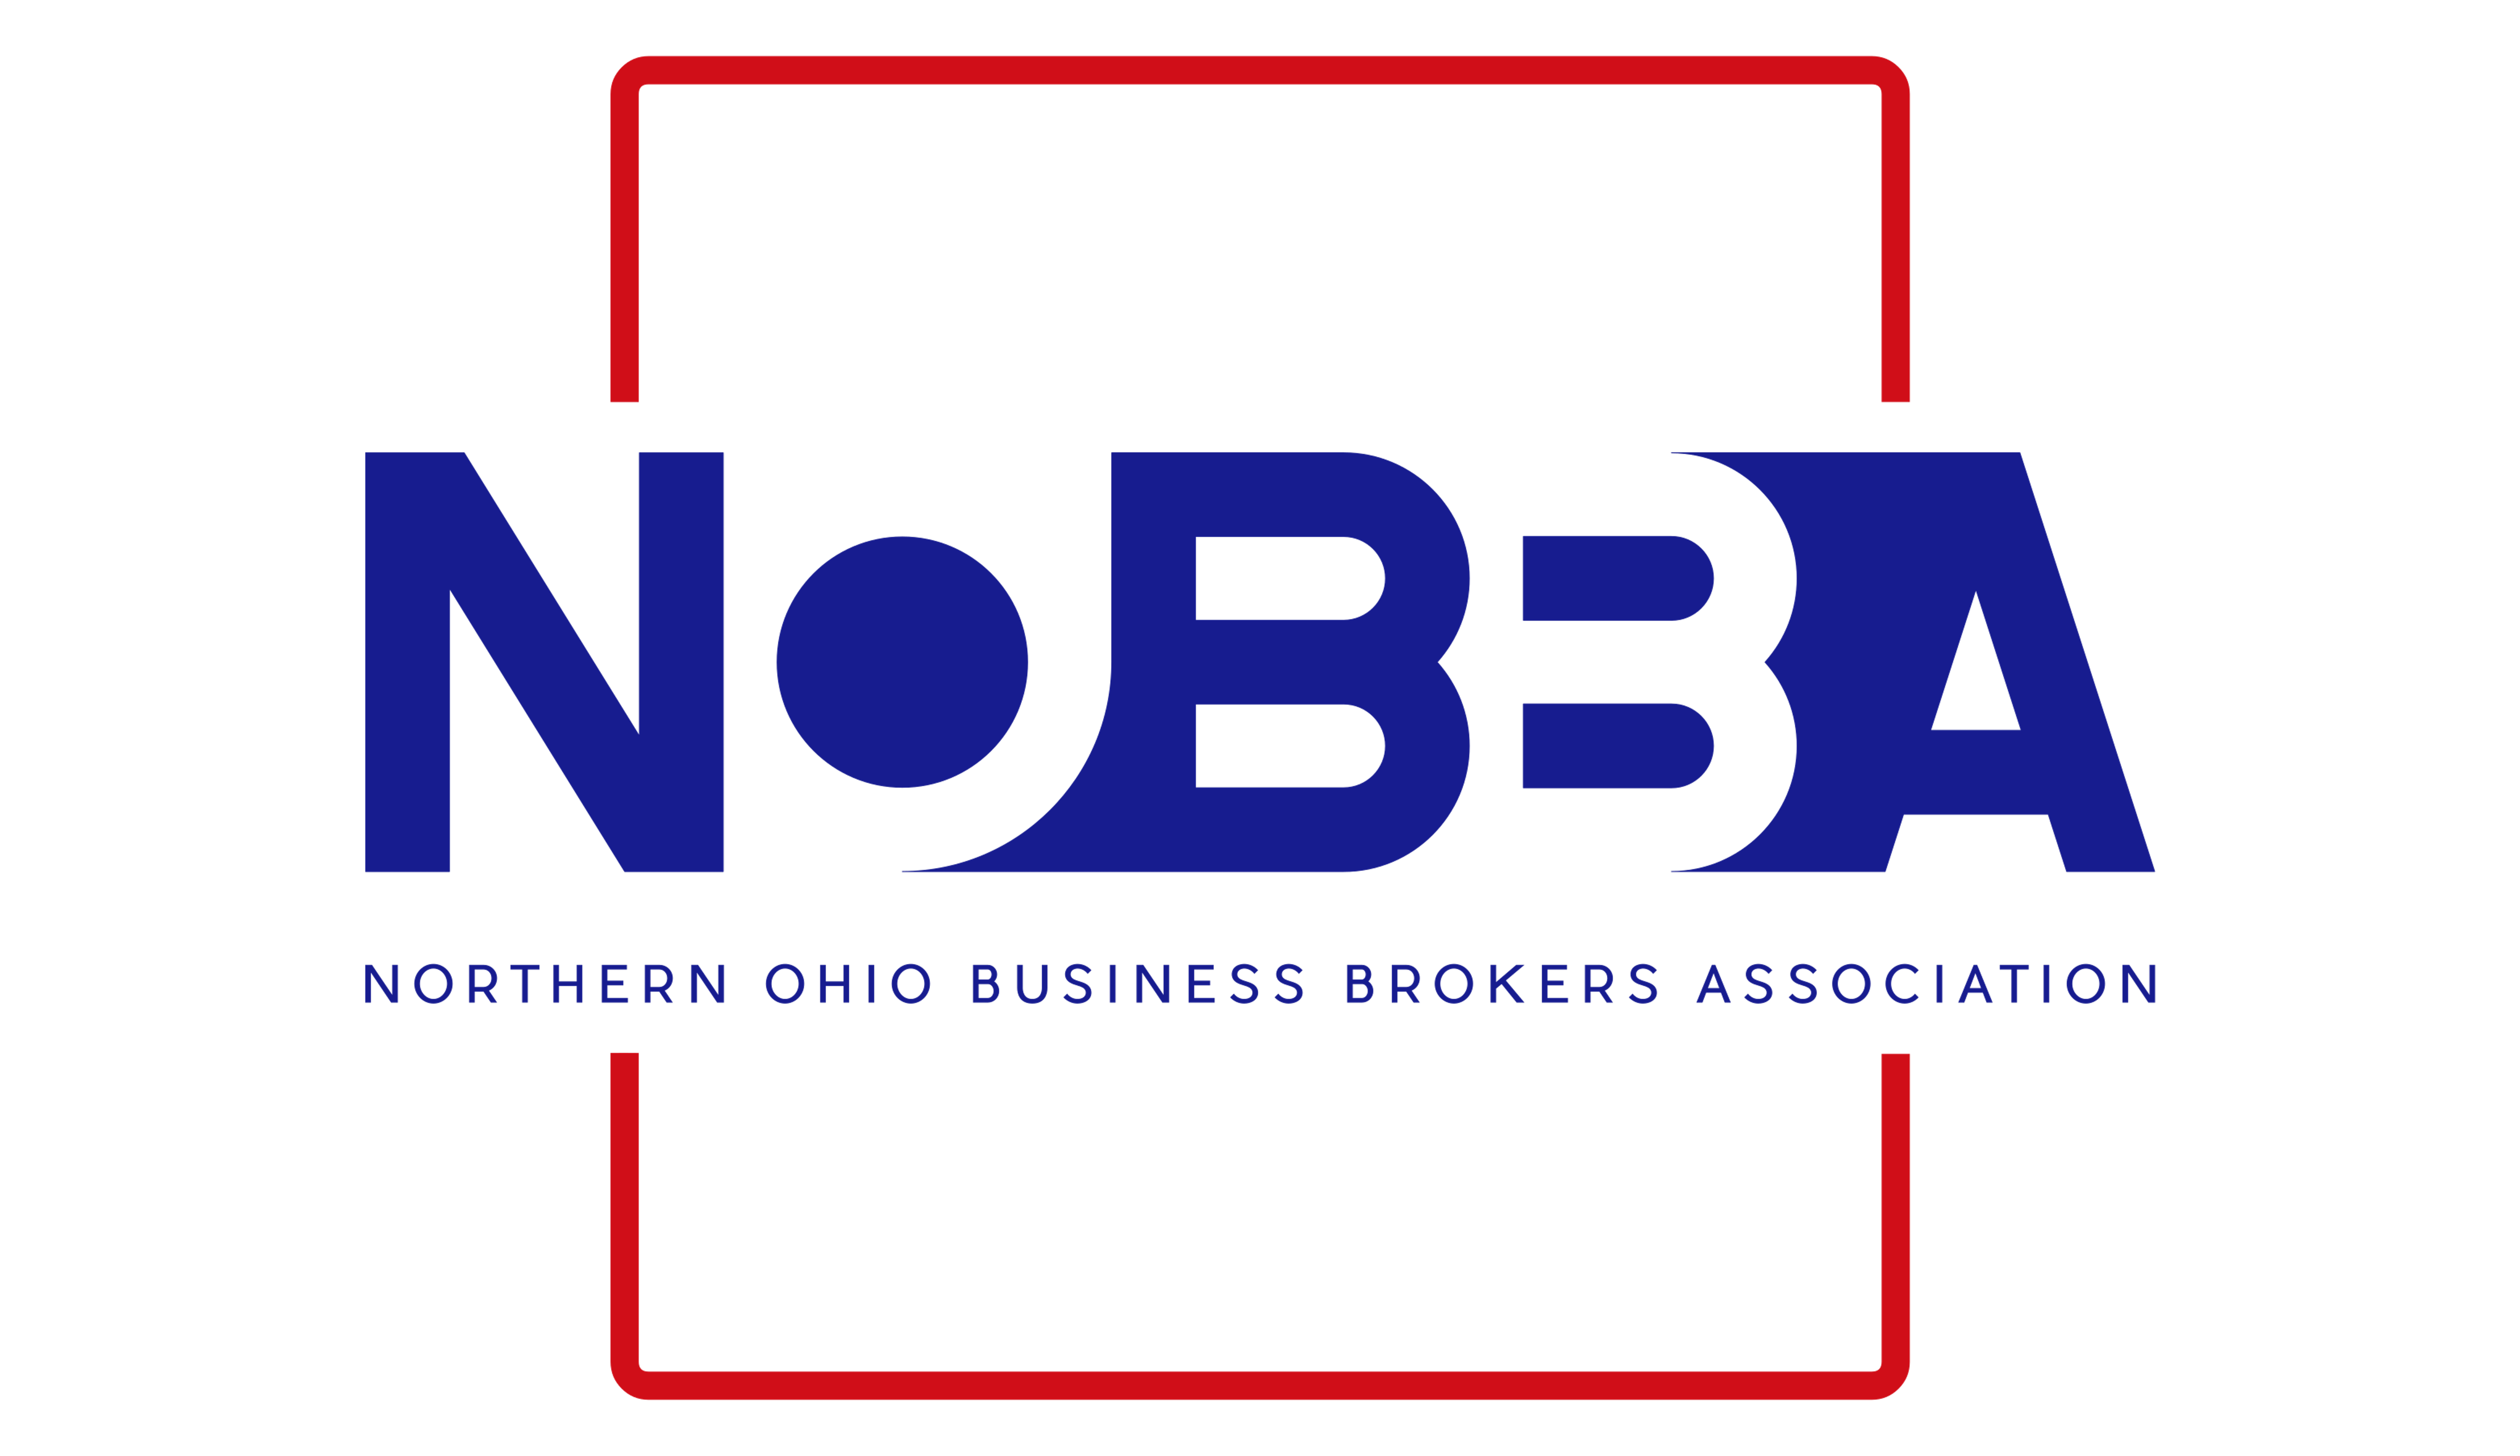 NOBBA Logo